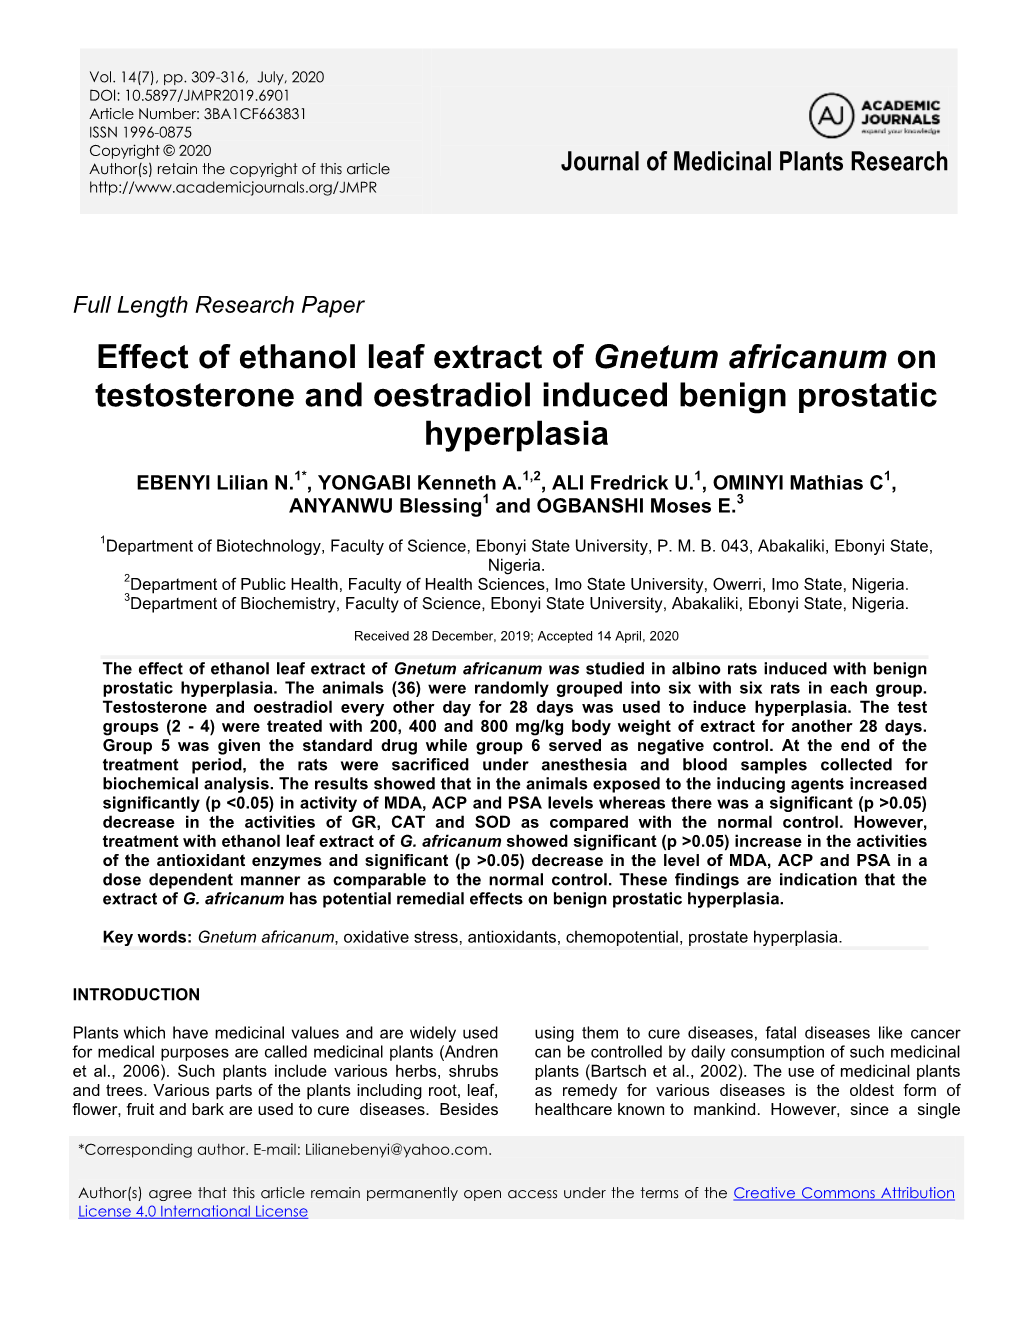 Effect of Ethanol Leaf Extract of Gnetum Africanum on Testosterone and Oestradiol Induced Benign Prostatic Hyperplasia